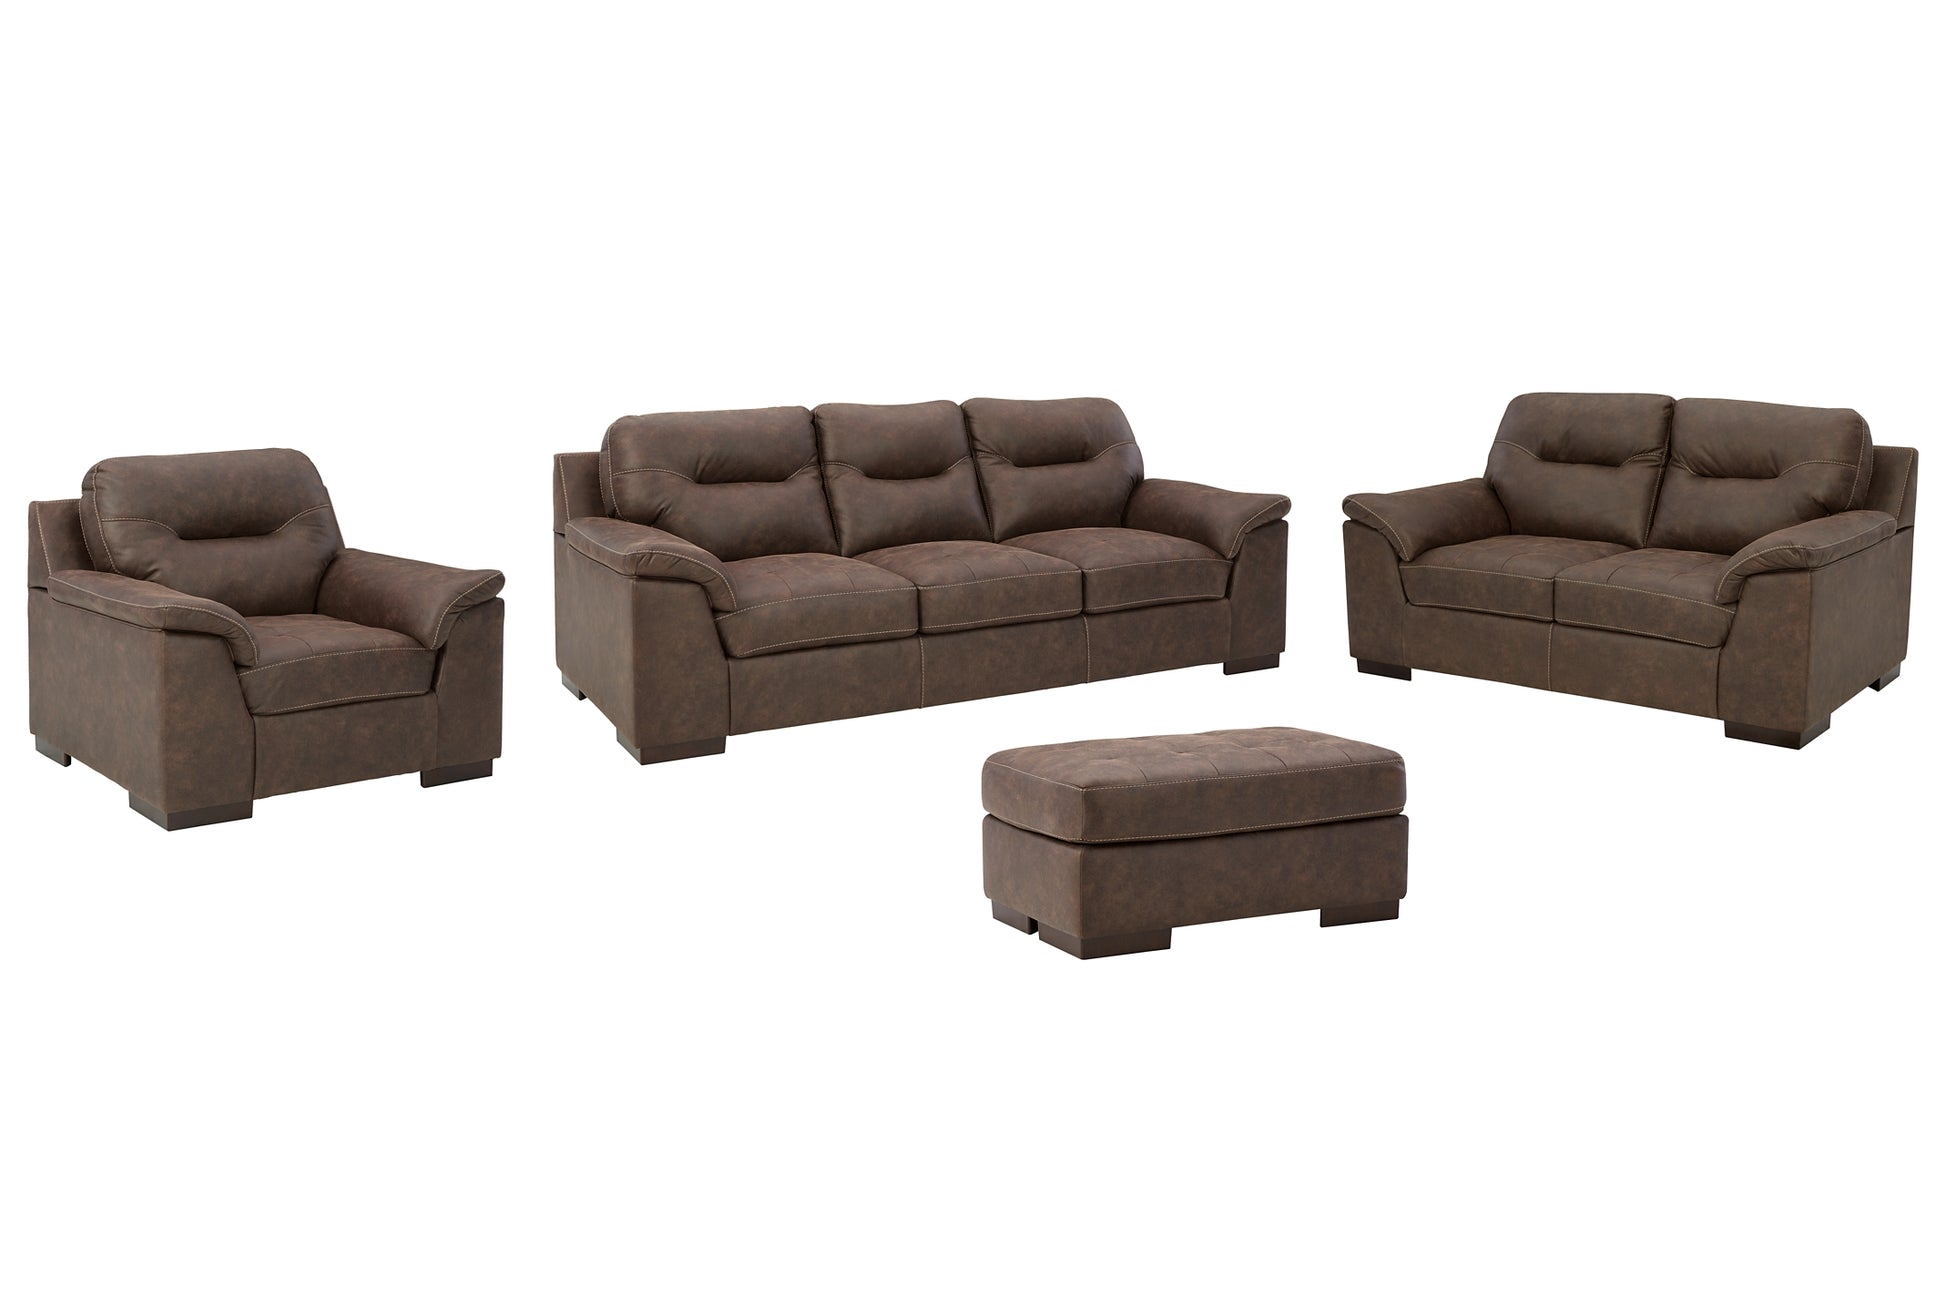 Maderla Sofa, Loveseat, Chair and Ottoman JB's Furniture  Home Furniture, Home Decor, Furniture Store